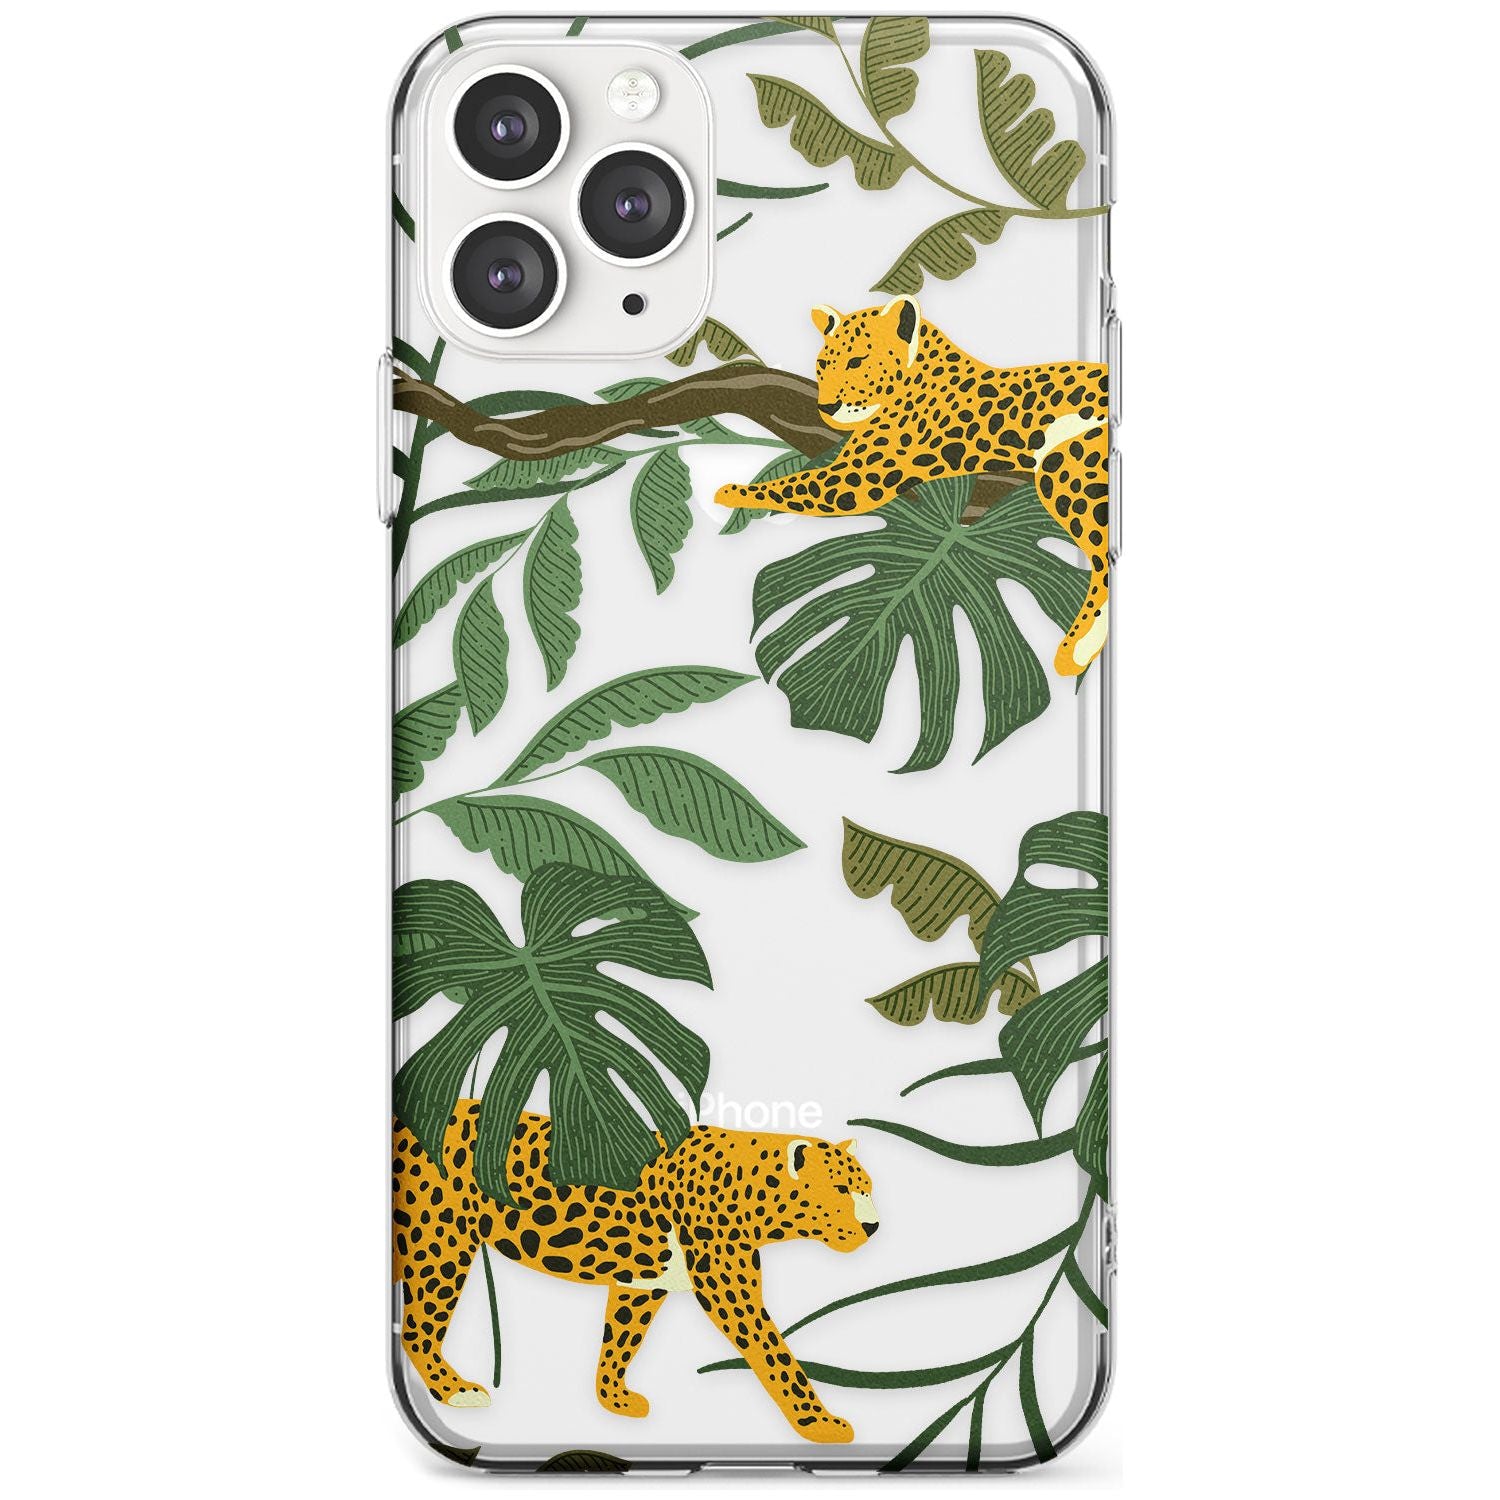 Two Jaguars & Foliage Jungle Cat Pattern Slim TPU Phone Case for iPhone 11 Pro Max